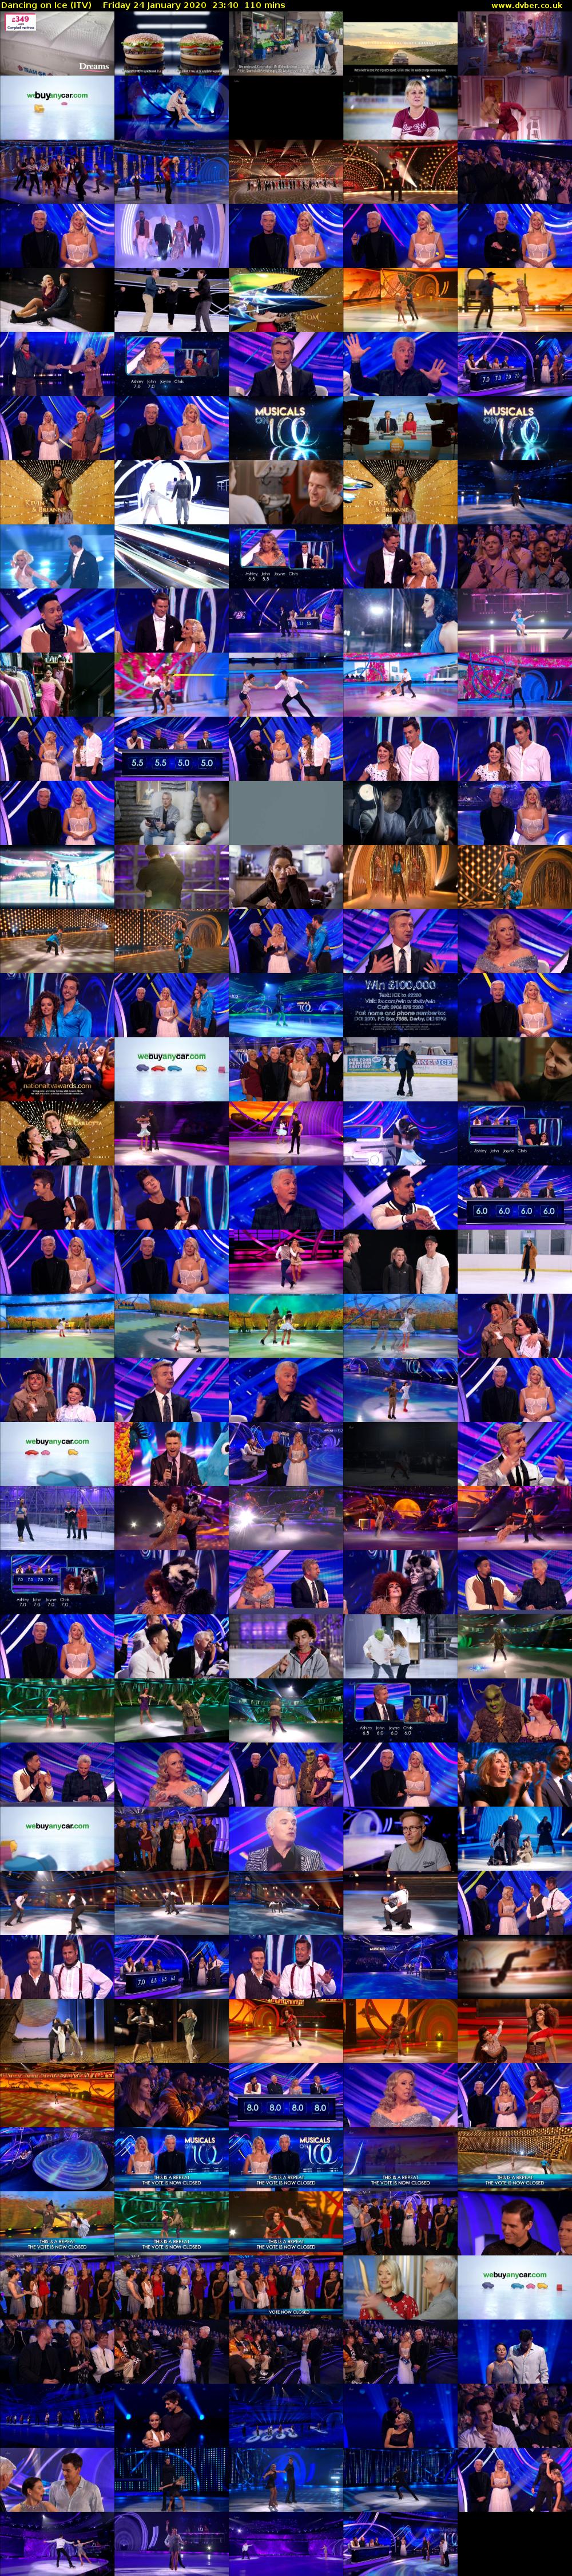 Dancing on Ice (ITV) Friday 24 January 2020 23:40 - 01:30